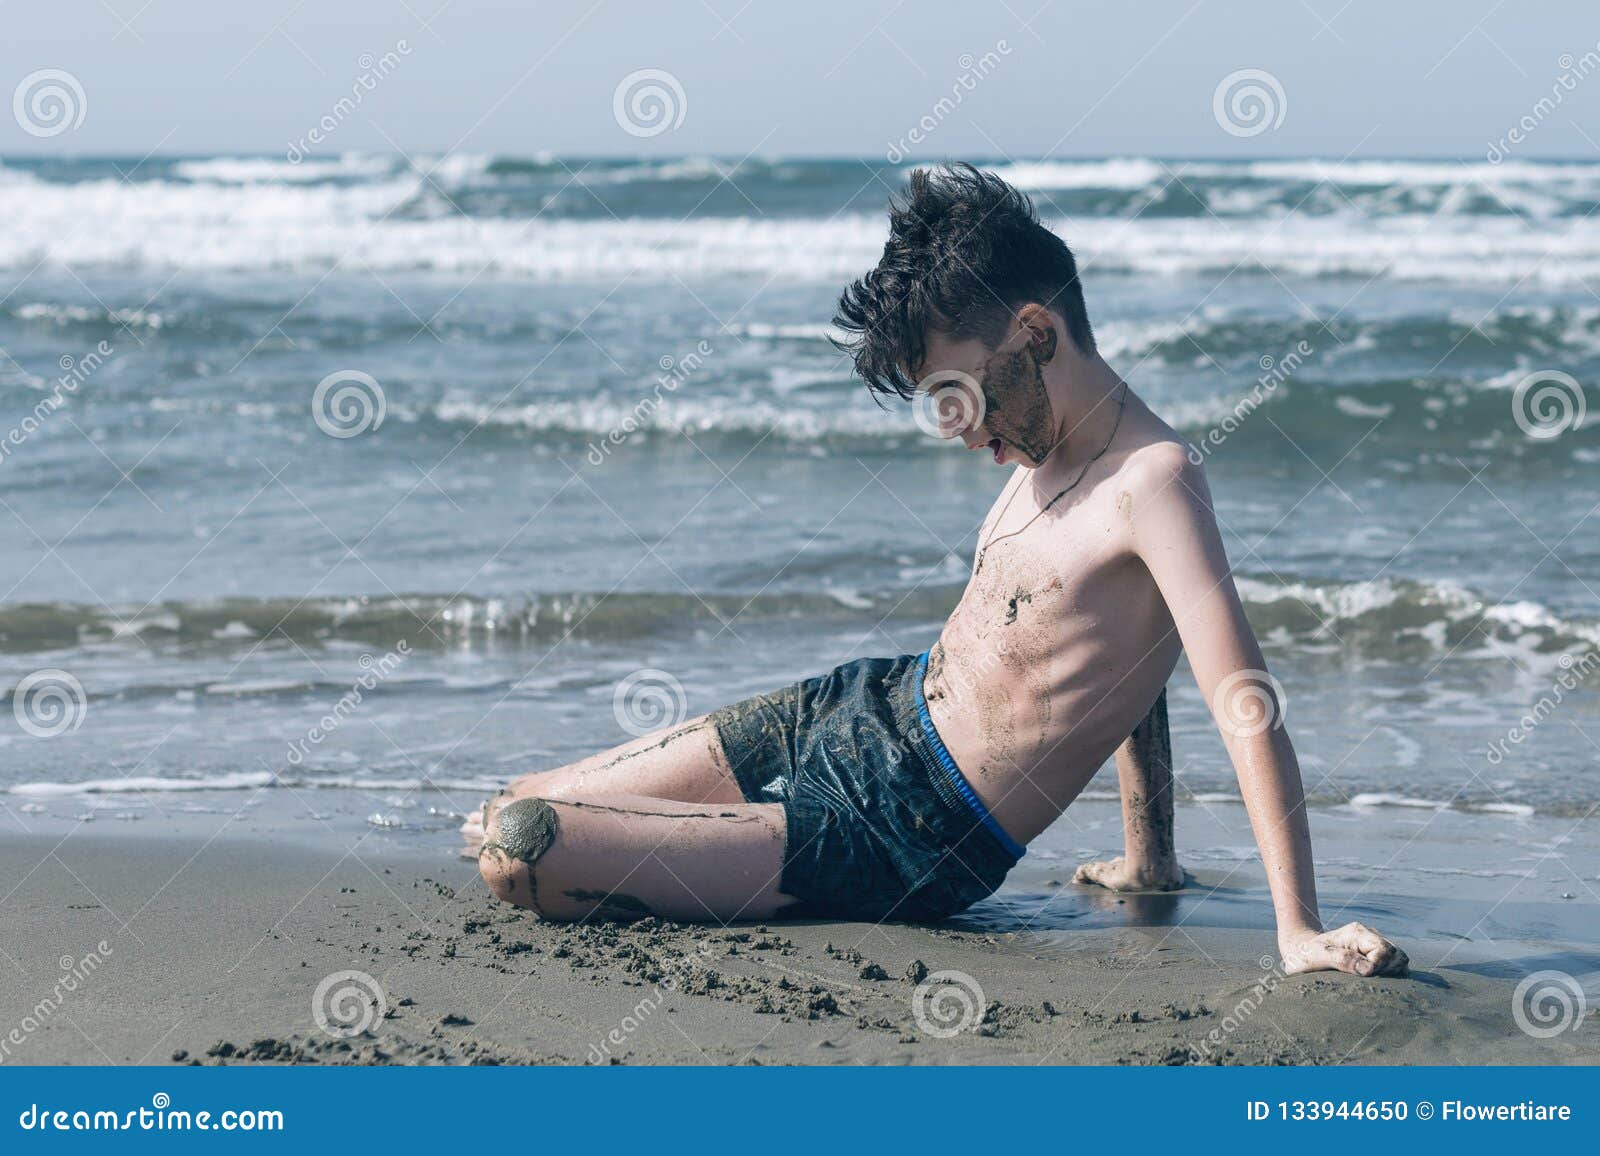 chad laux reccomend naked beach fun pic